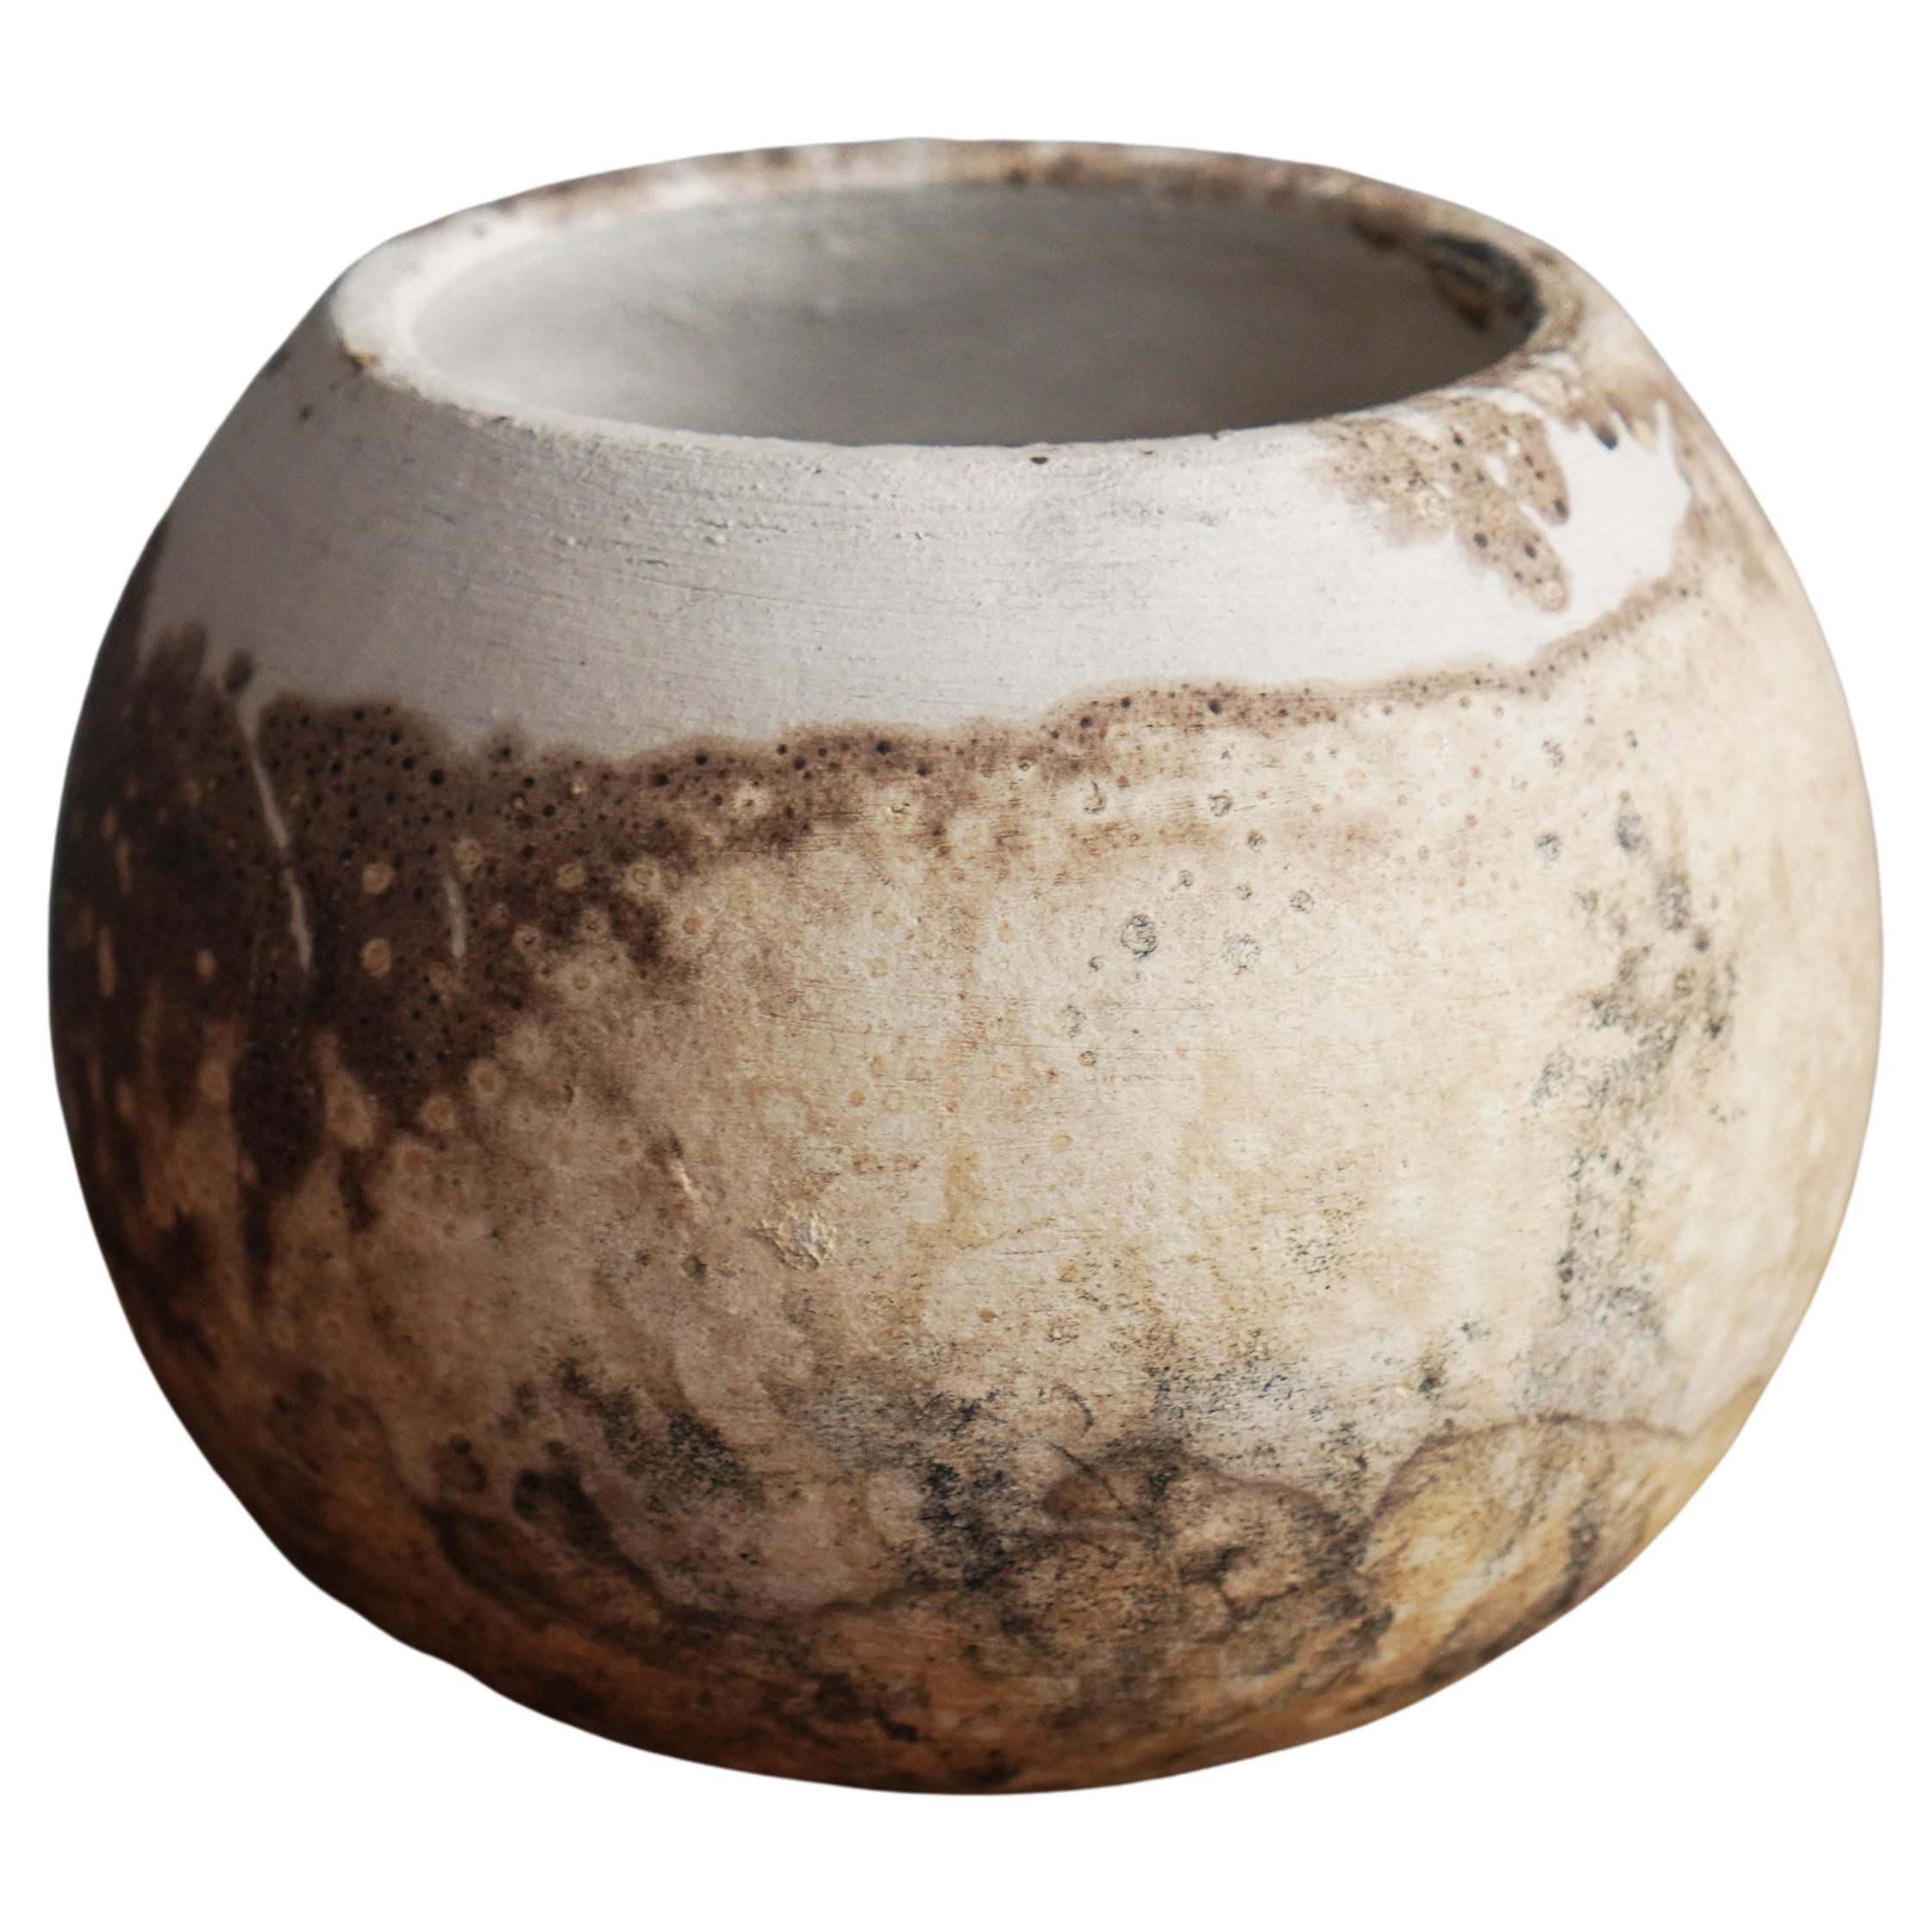 Zen Raku Keramikvase - Obvara - Handgefertigte Keramikvase für das Zuhause, Geschenk aus Keramik